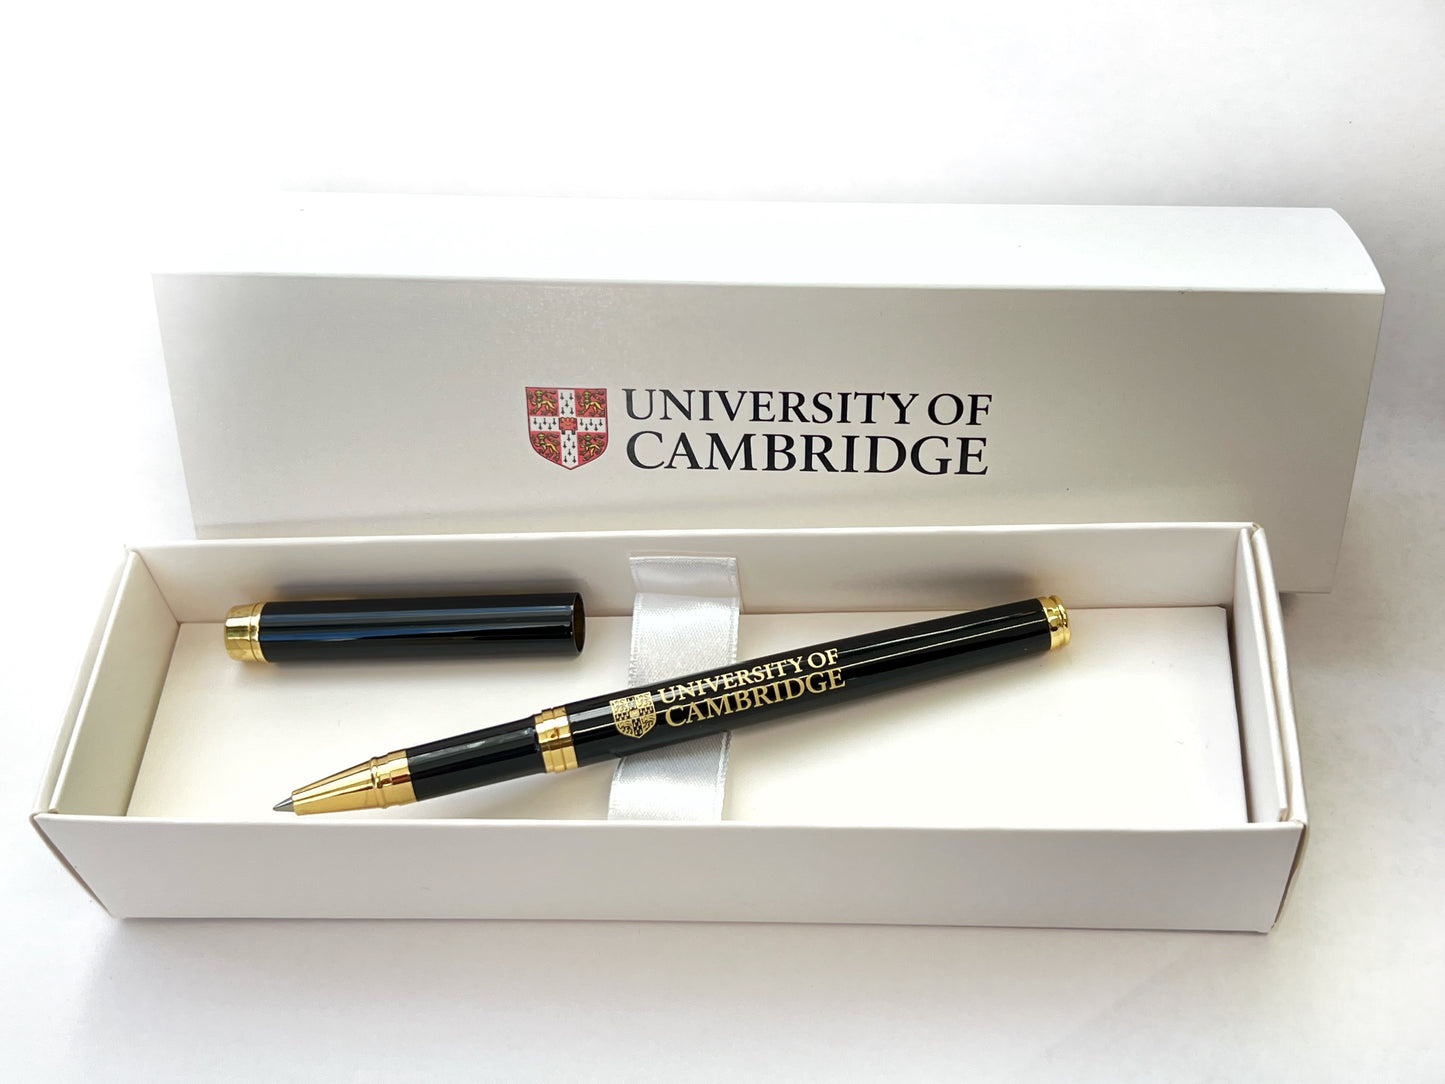 University of Cambridge Pen in a Box